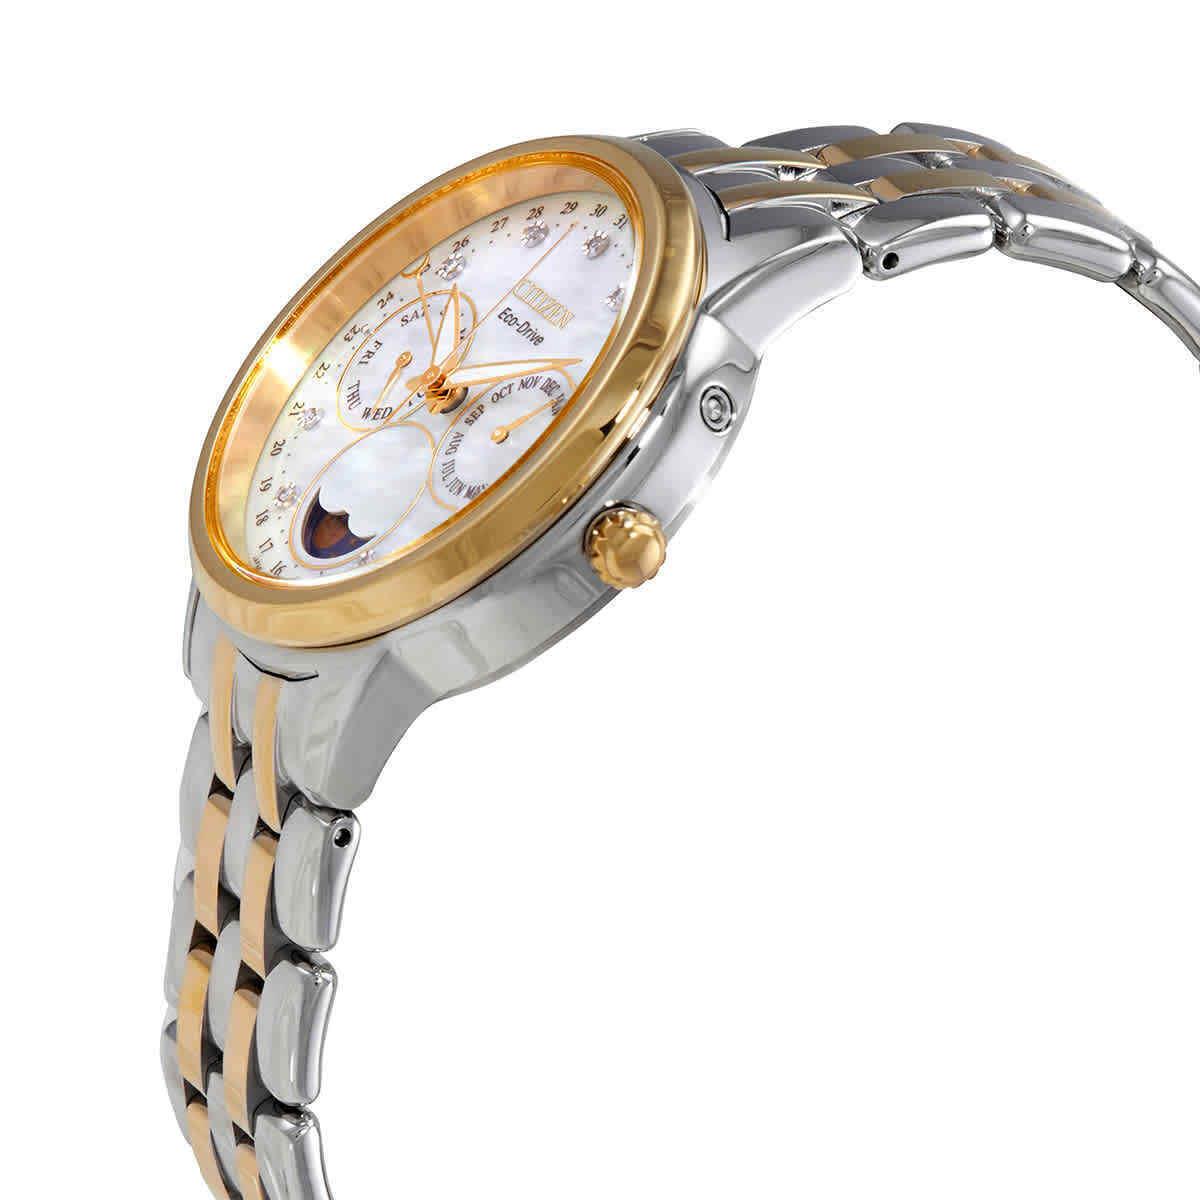 Citizen Eco-drive Calendrier Chronograph Diamond Ladies Watch FD0004-51D - Dial: White, Band: , Bezel: Gold